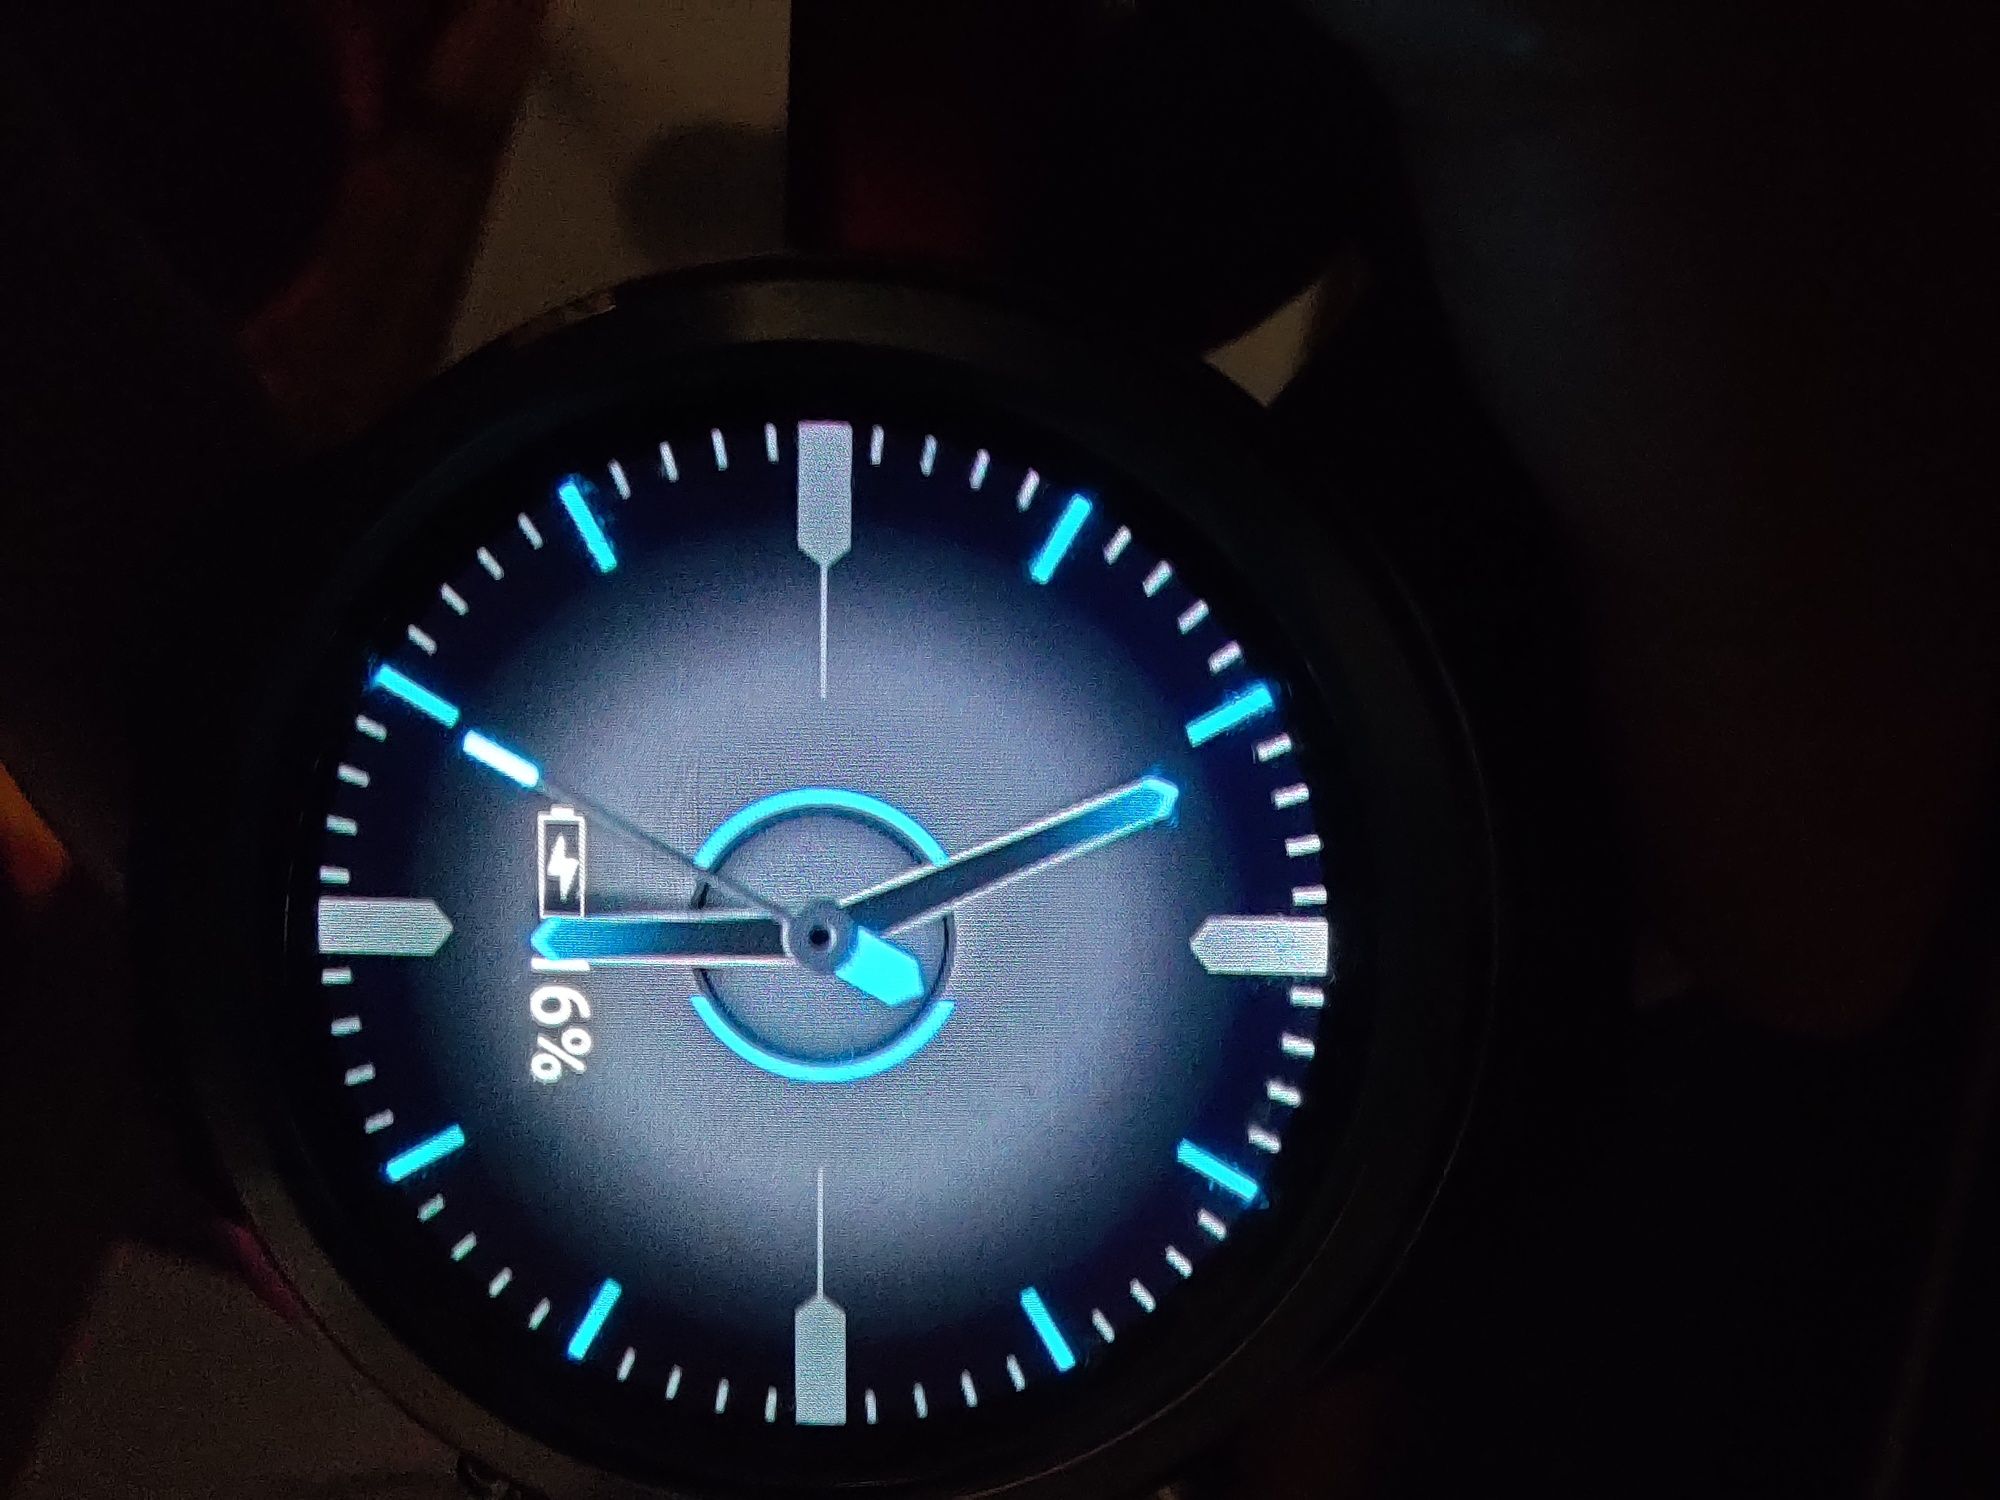 Finox X5 air Smartwatch 2GB,16GB